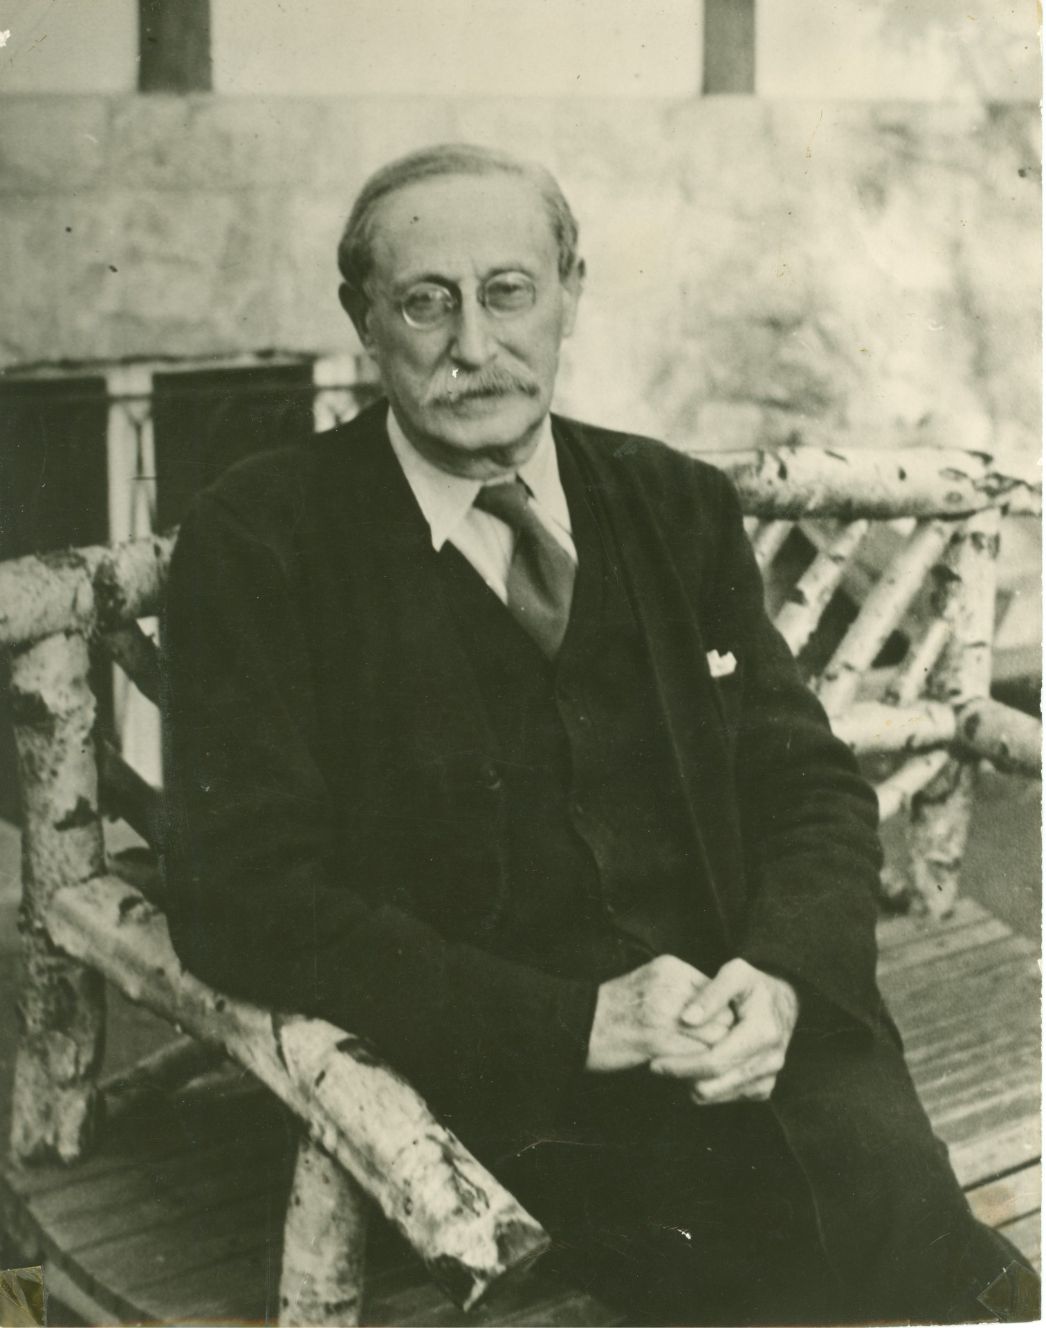 Photo of Léon Blum sitting